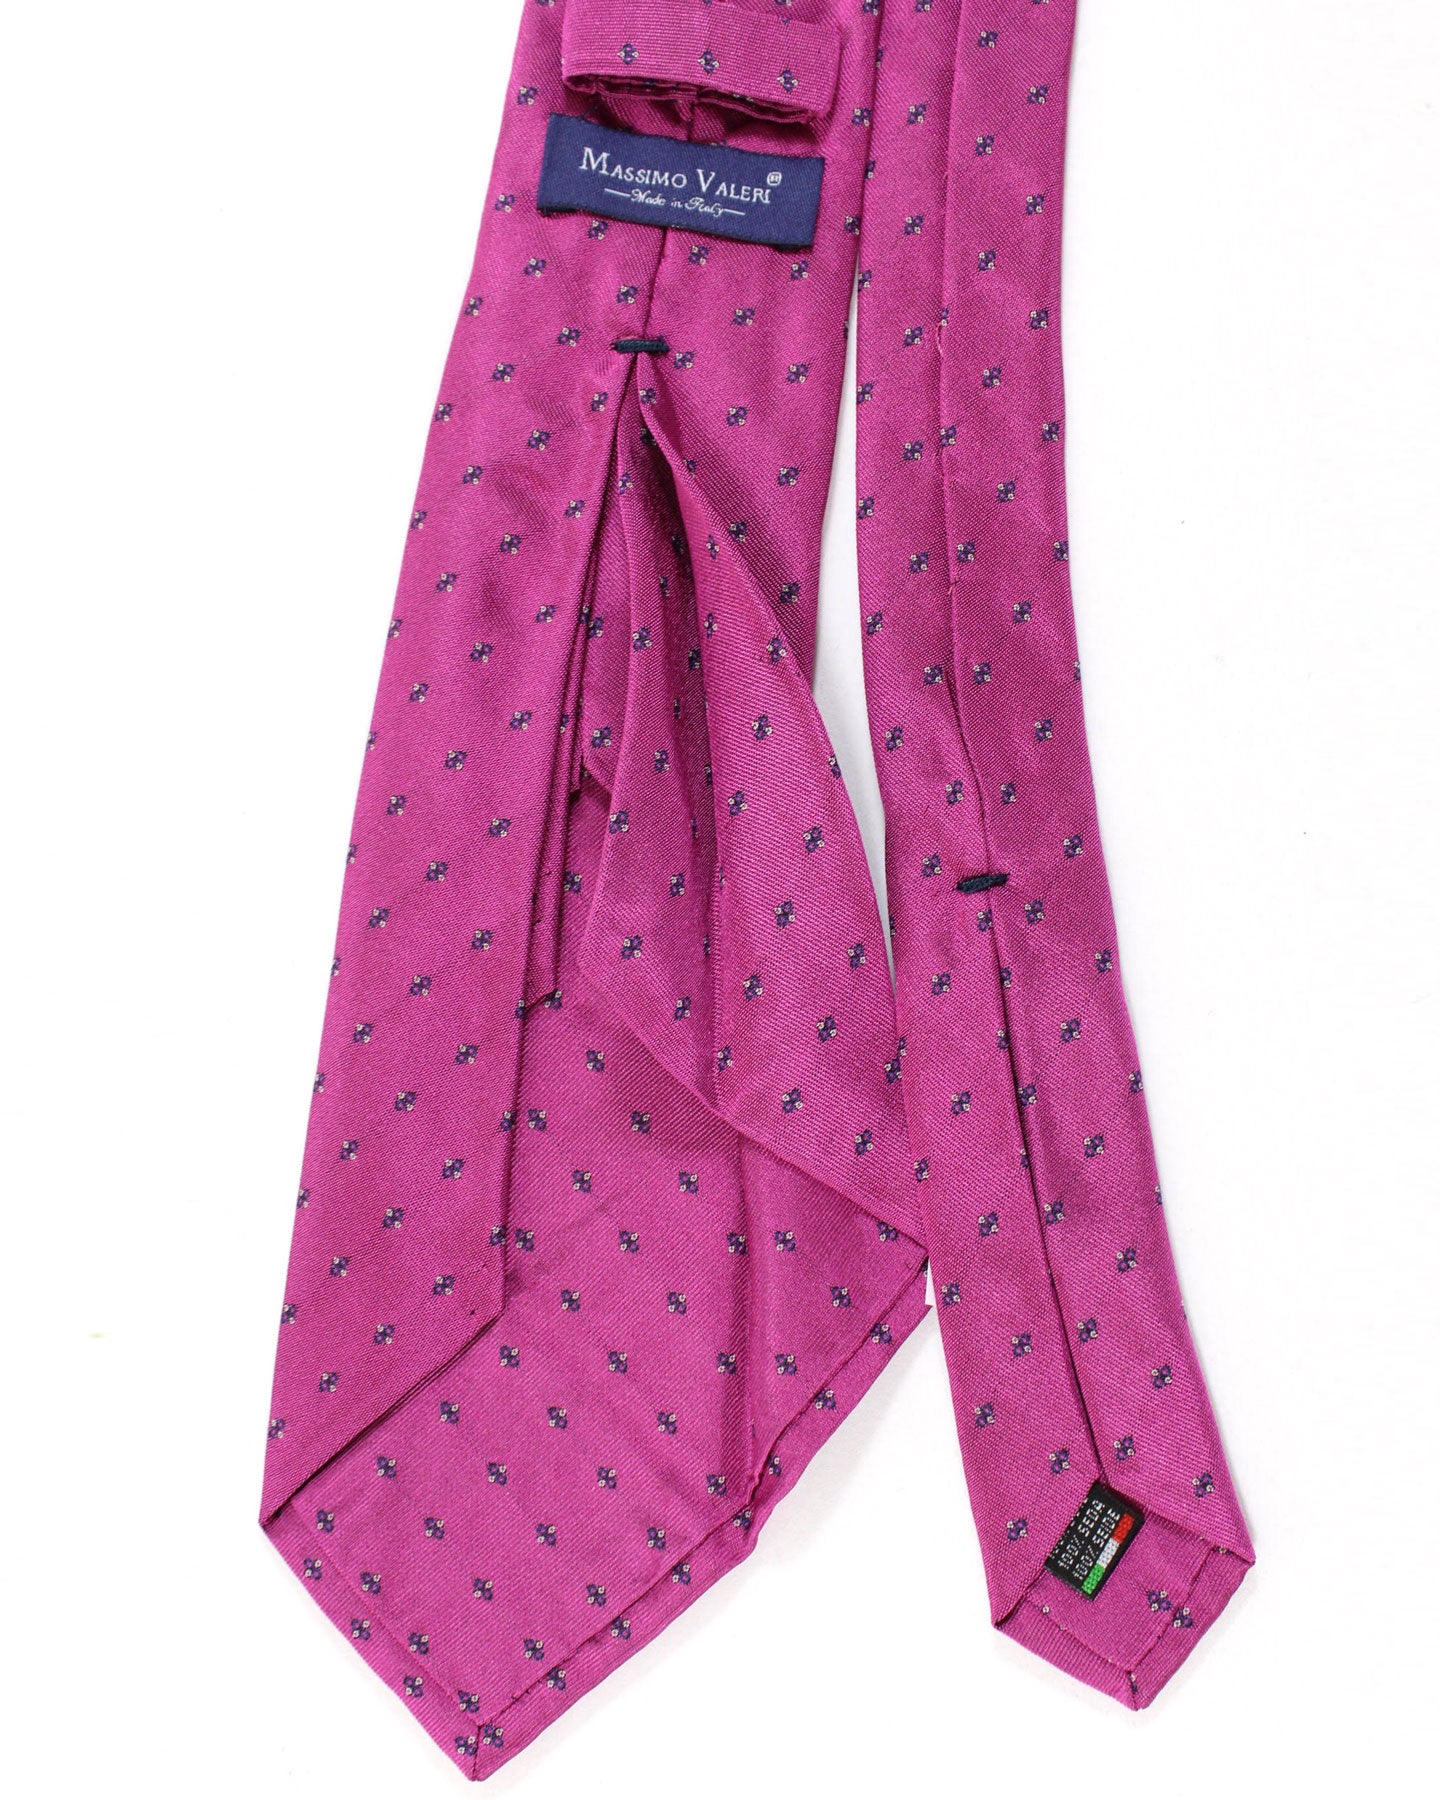 Massimo Valeri 11 Fold Tie Cranberry Pink Geometric - Elevenfold Necktie